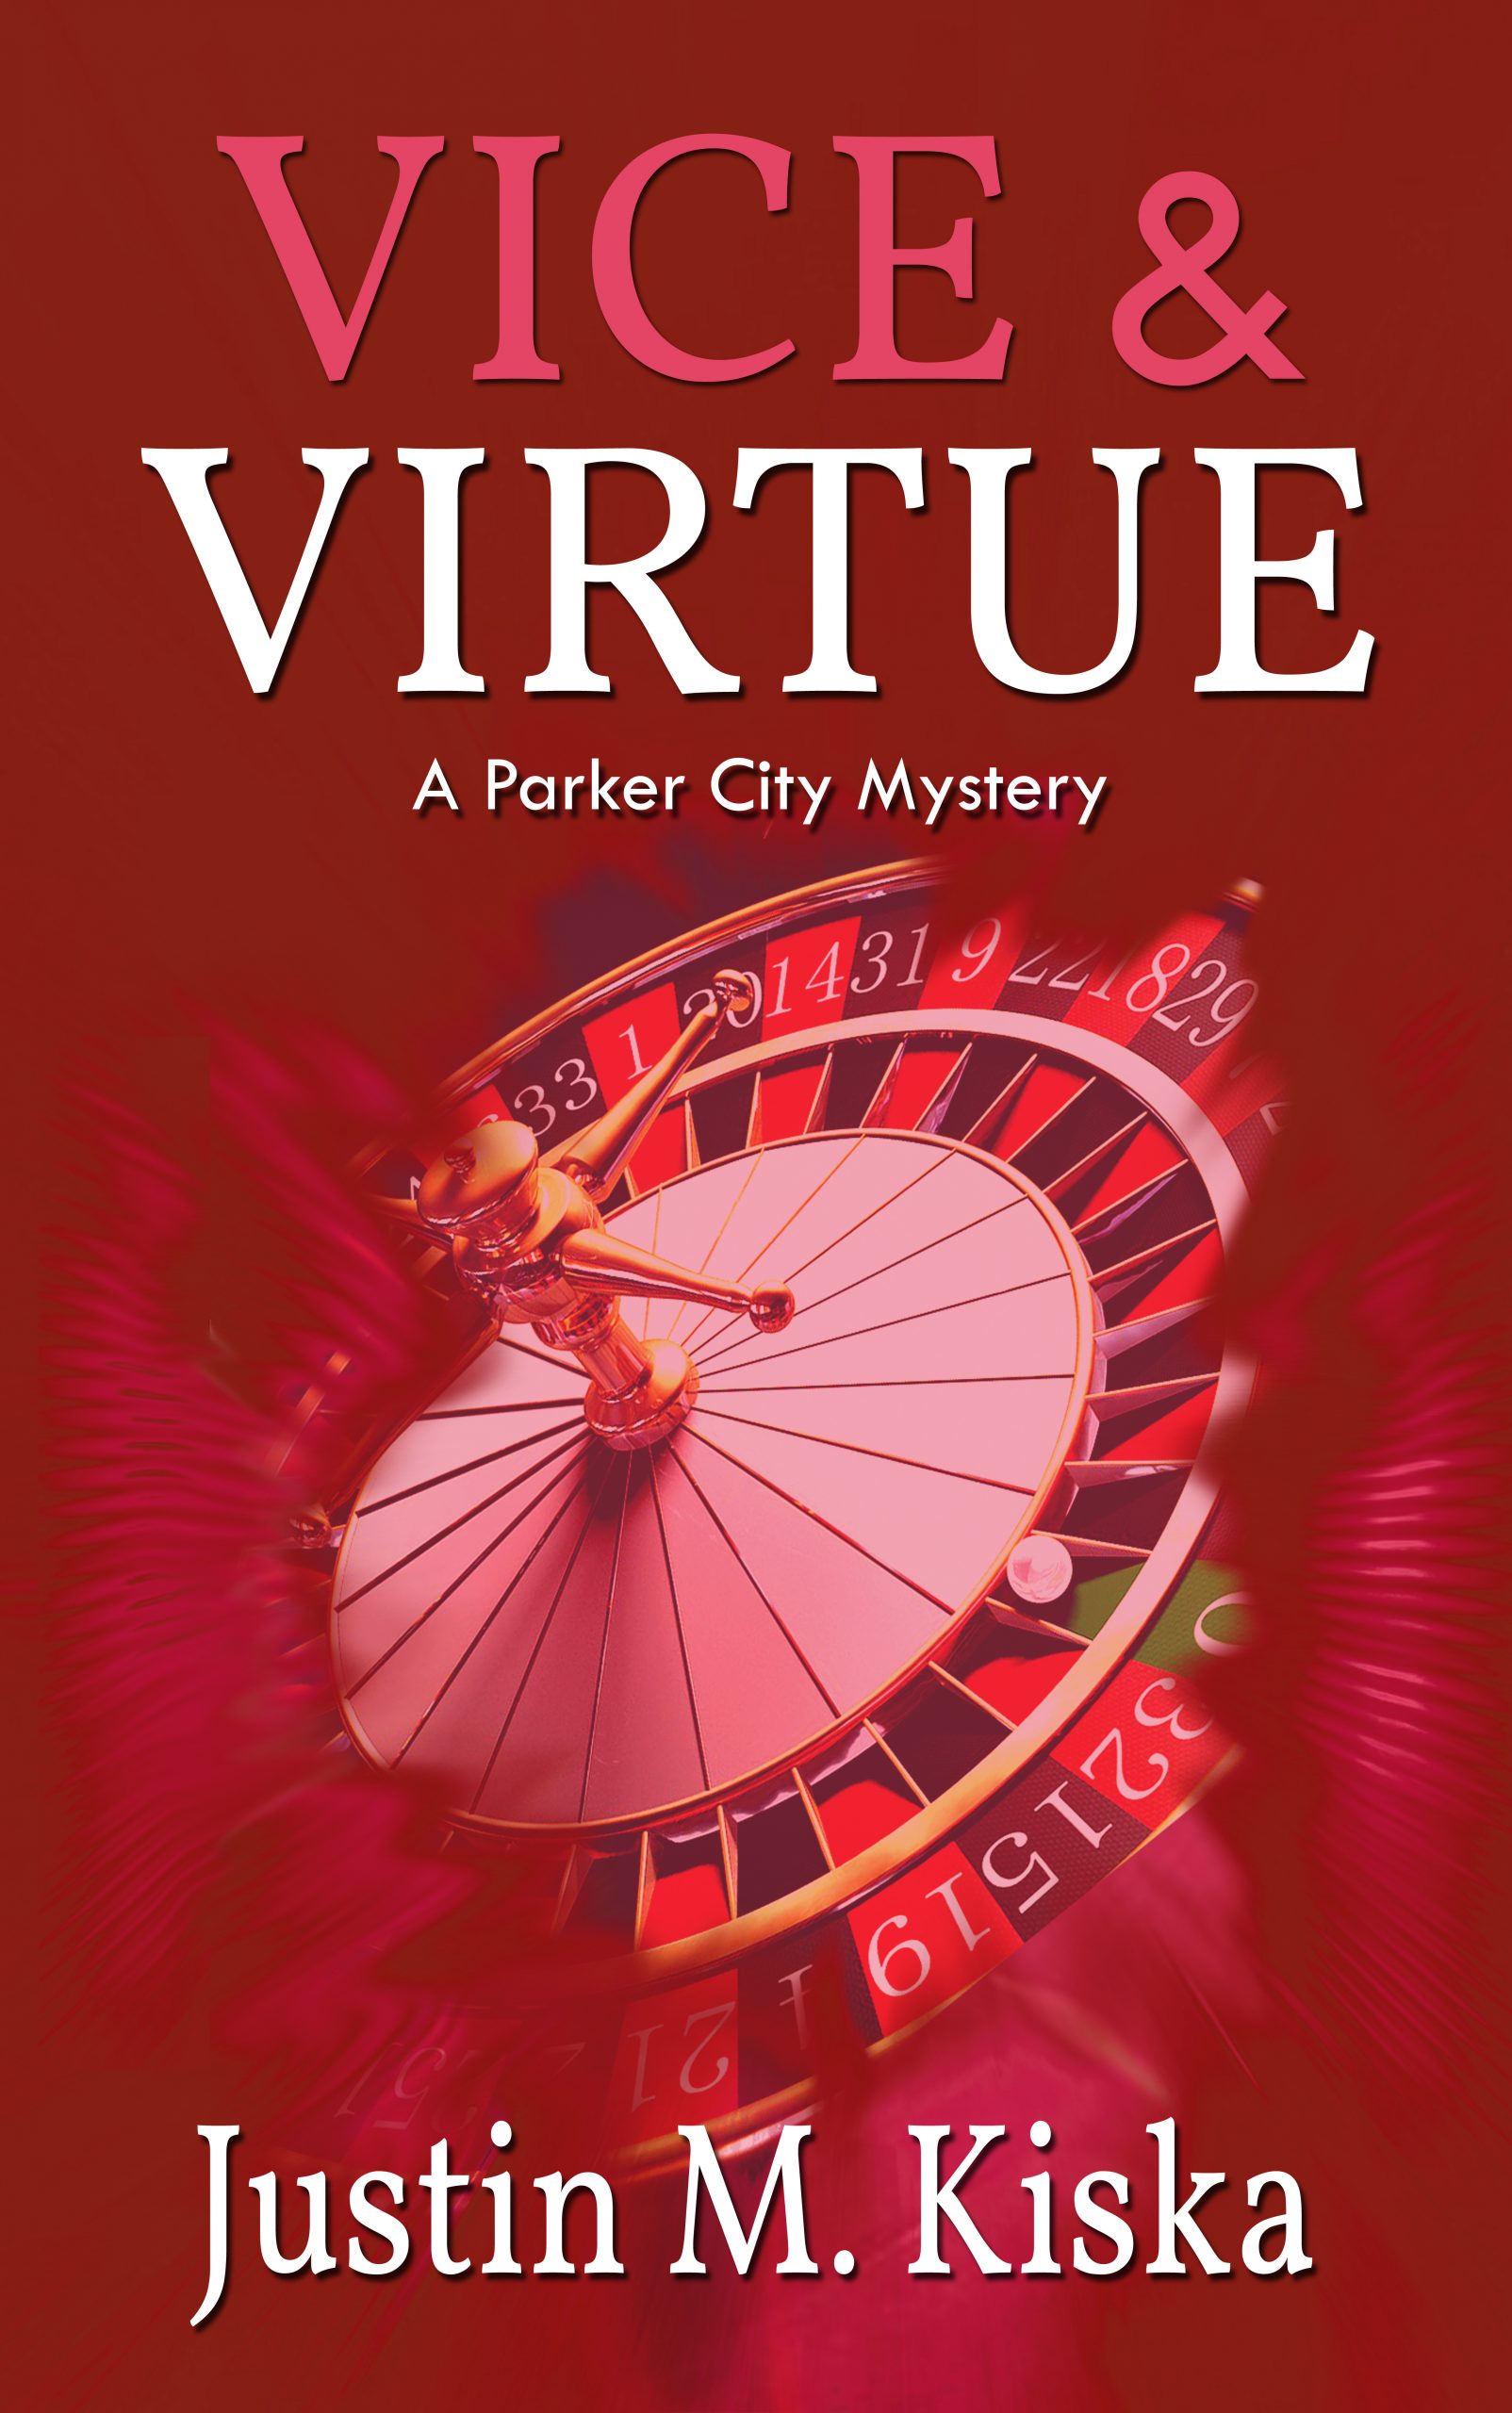 Vice & Virtue by Justin M. Kiska